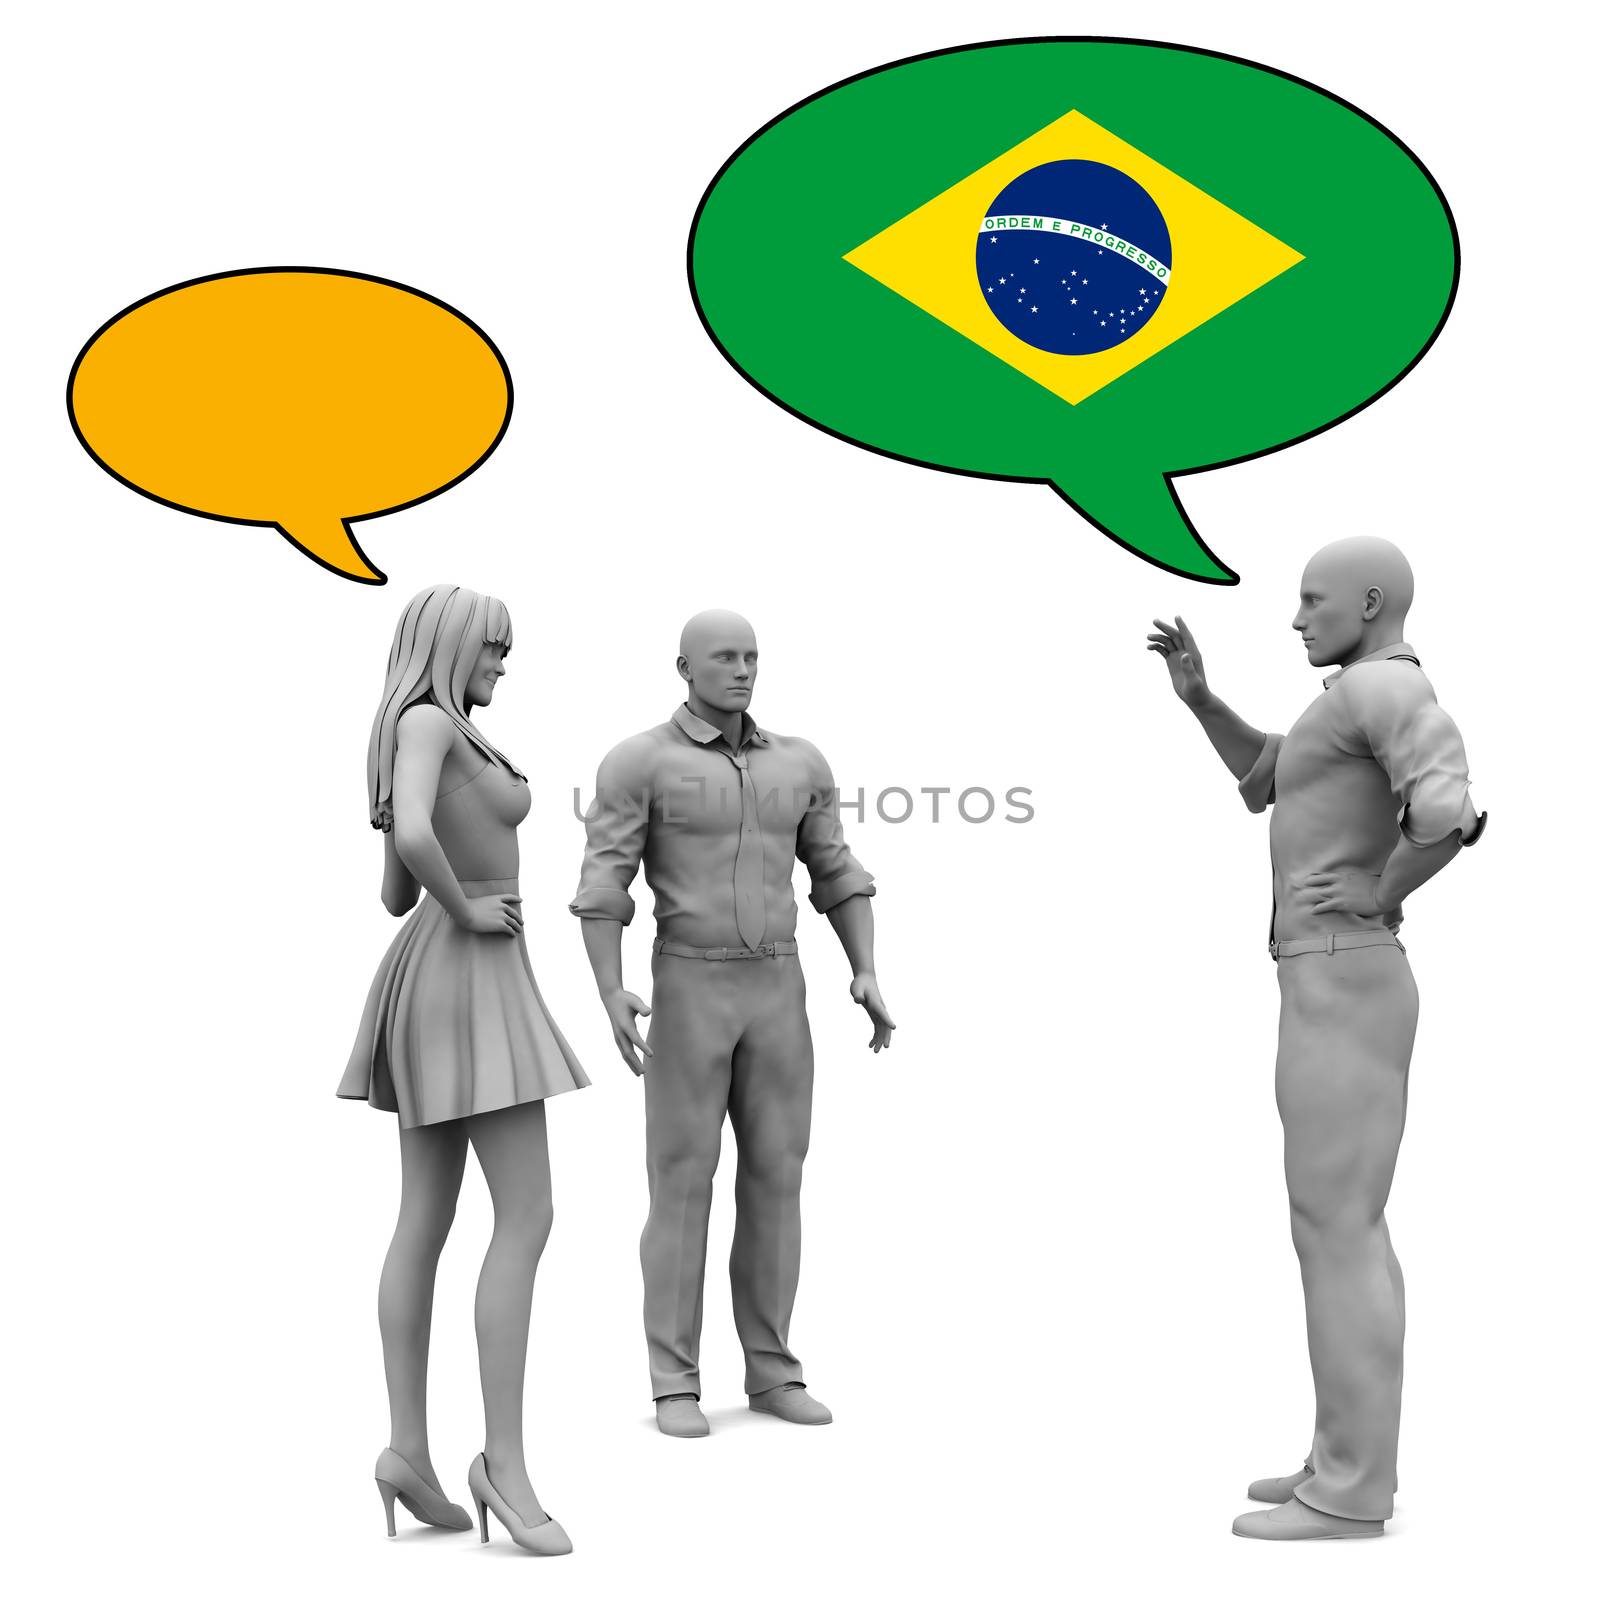 Learn Portuguese by kentoh